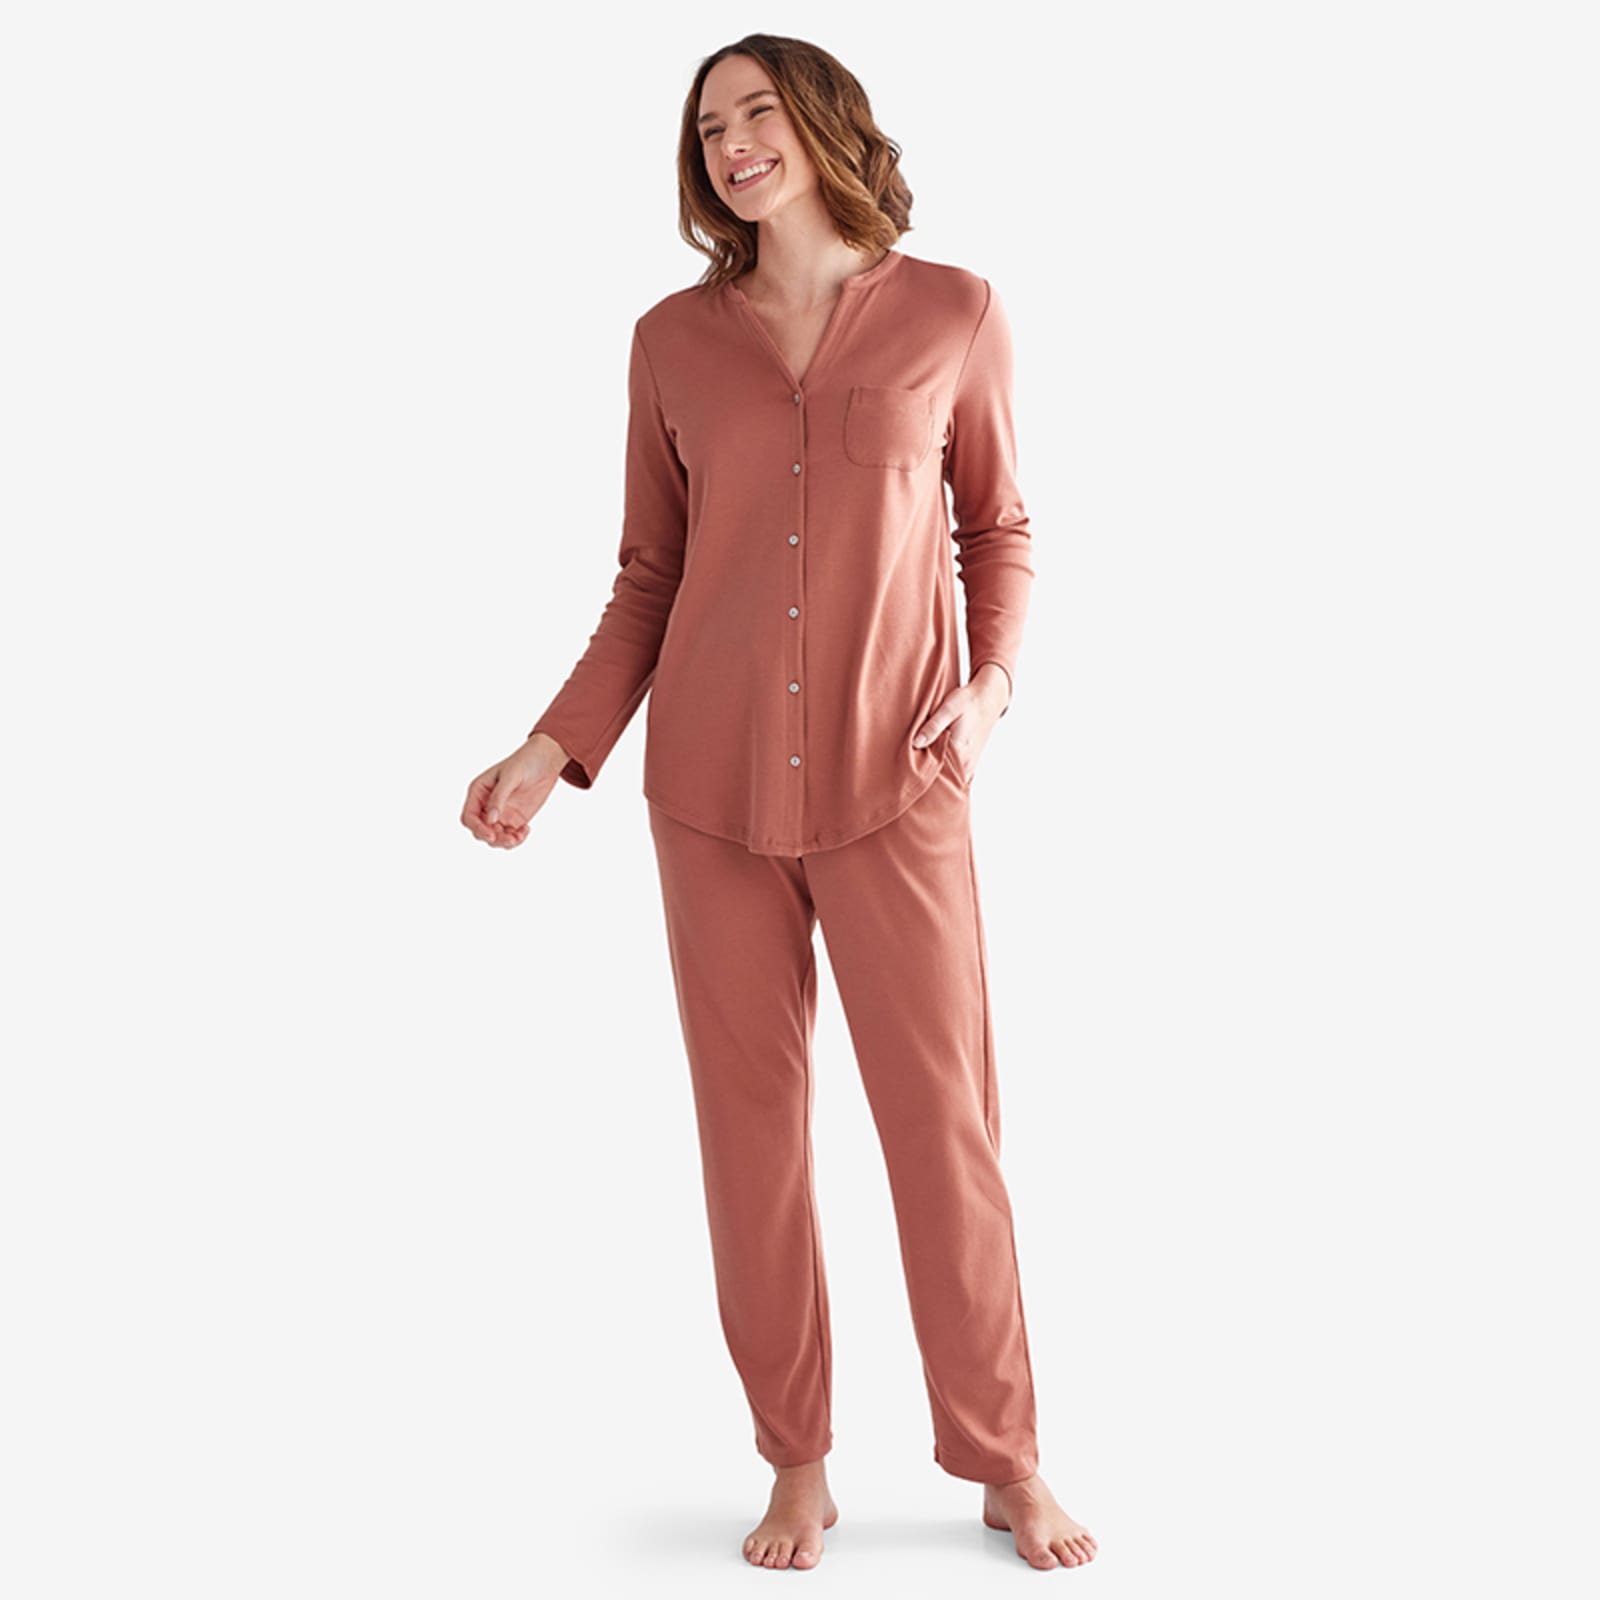 Women's Beautifully Soft Crop Pajama Pants - Stars Above Gray XL 1 ct